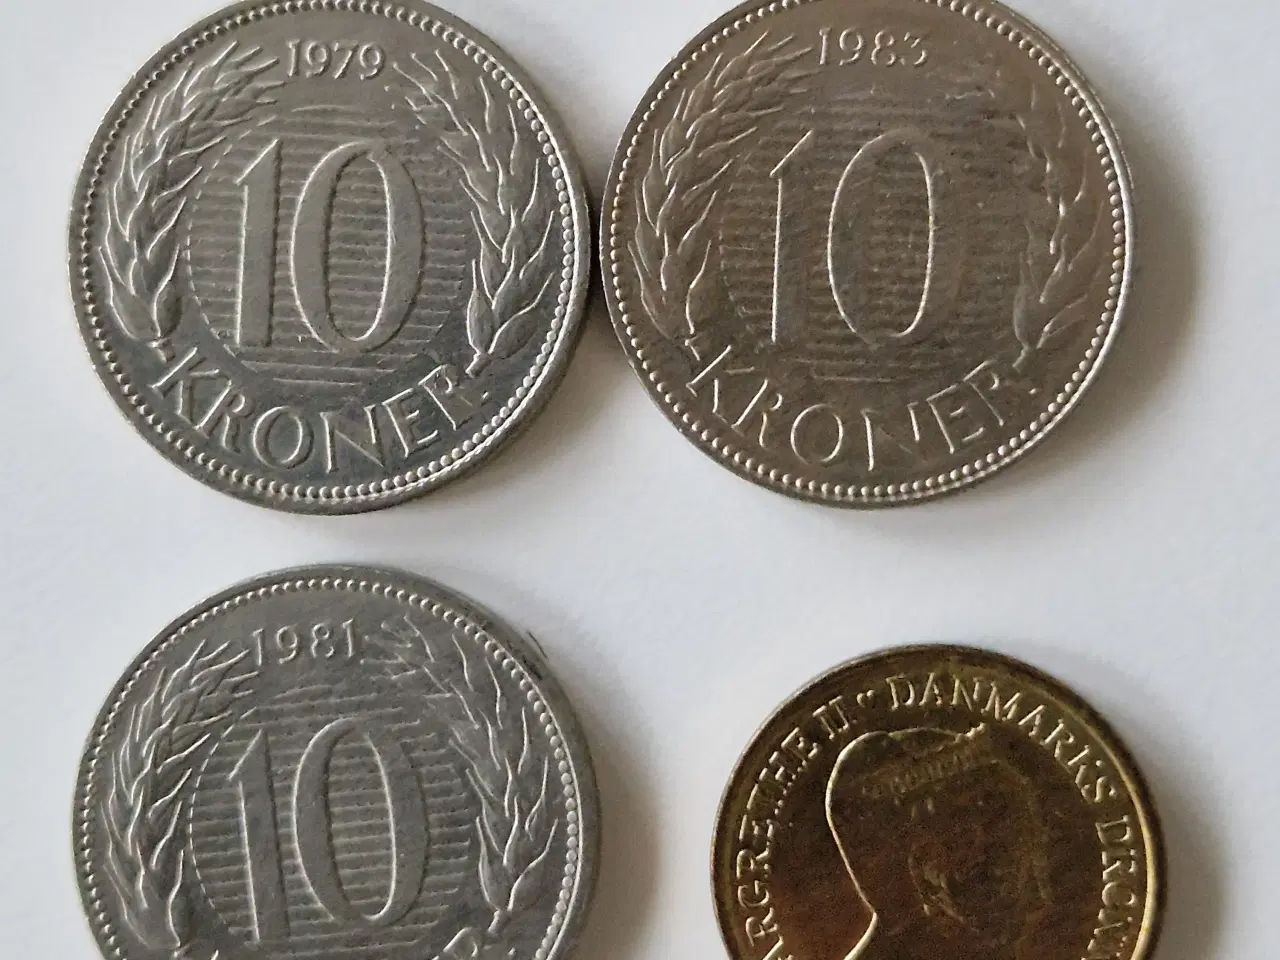 Billede 1 - 4 ti-kroner 1979, 1981, 1983, 2011